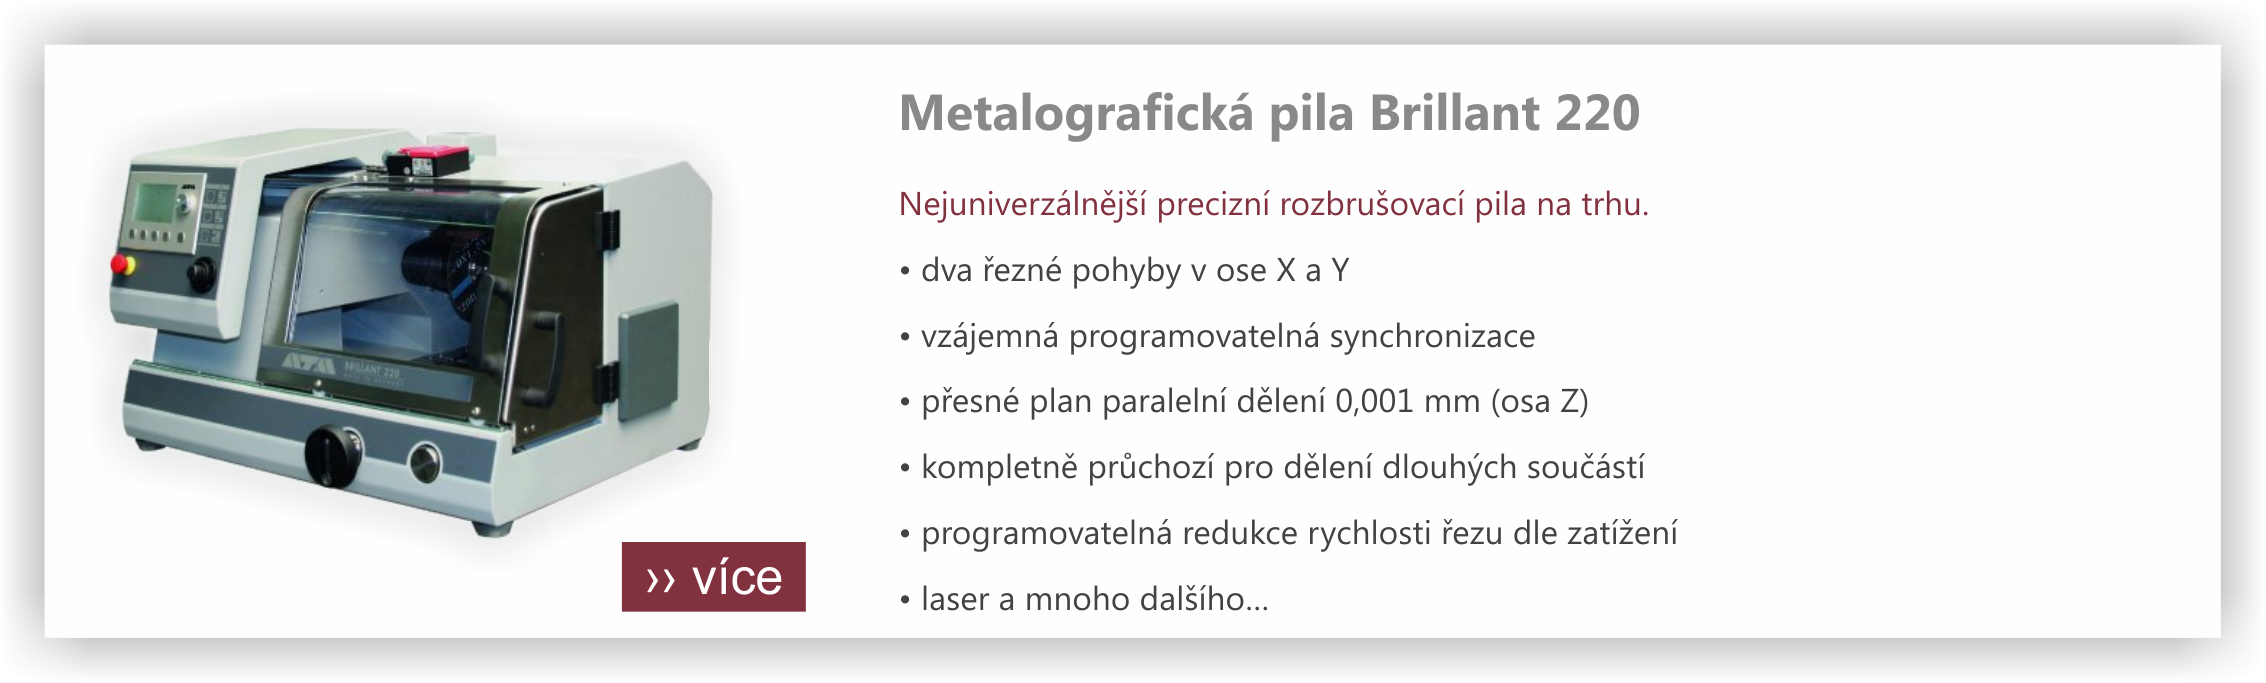 Metalografická pila Brillant 220